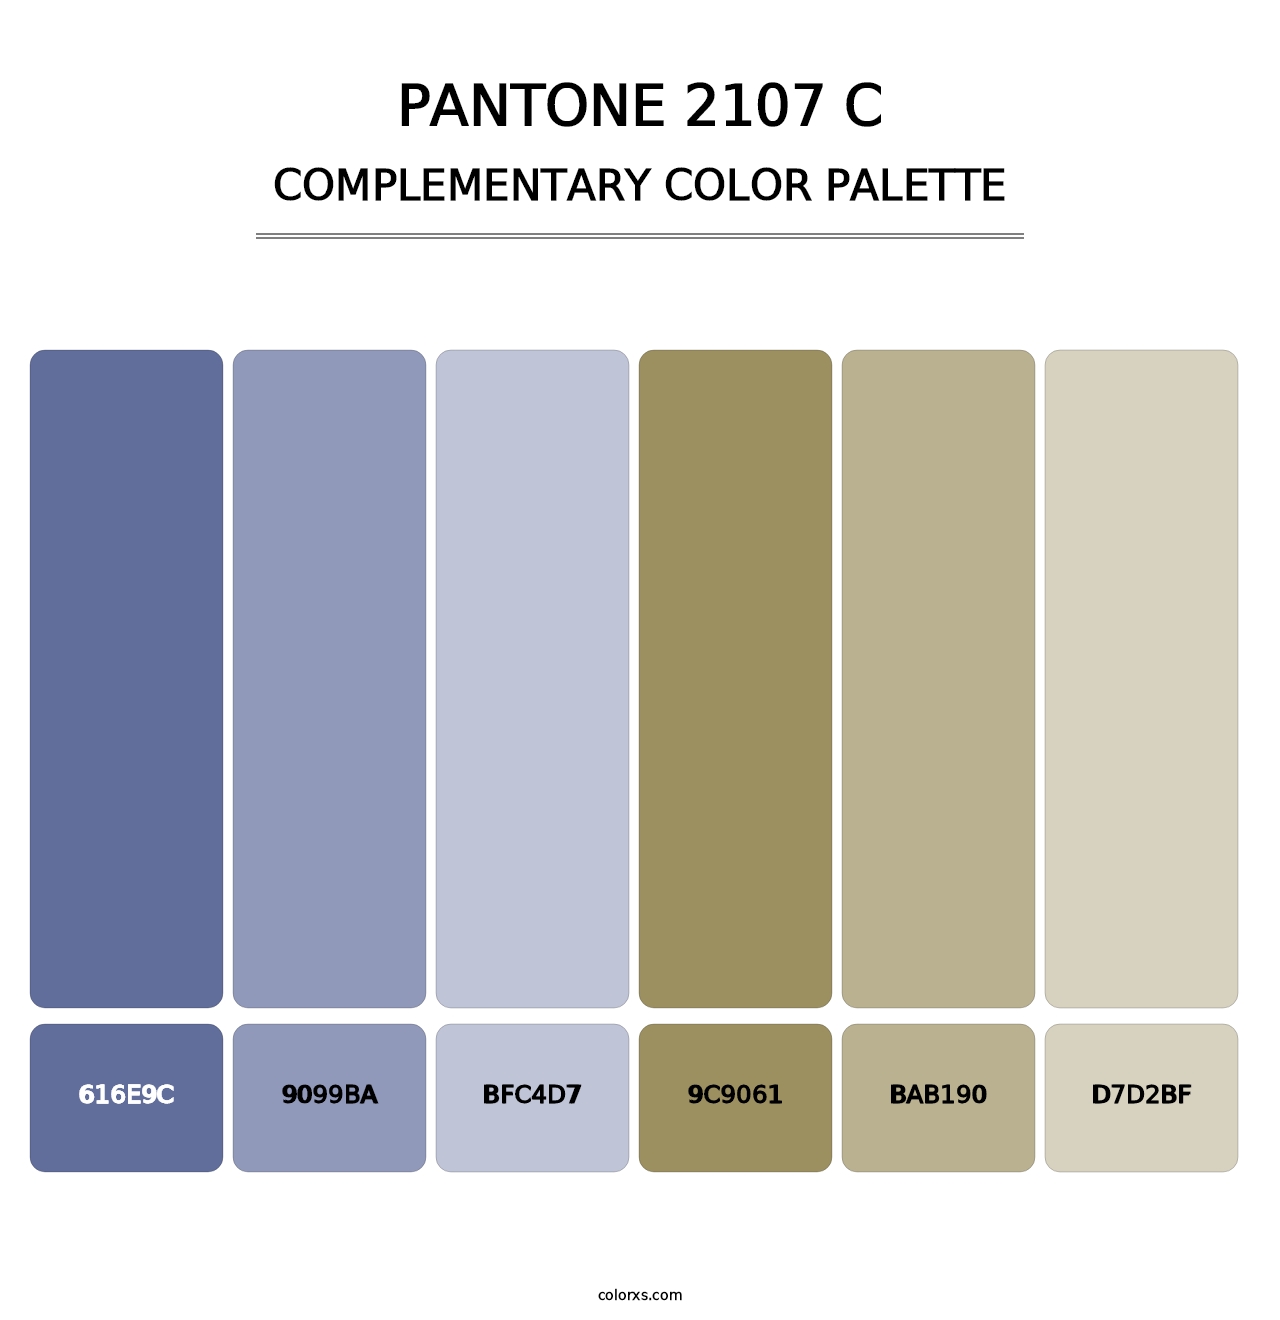 PANTONE 2107 C - Complementary Color Palette